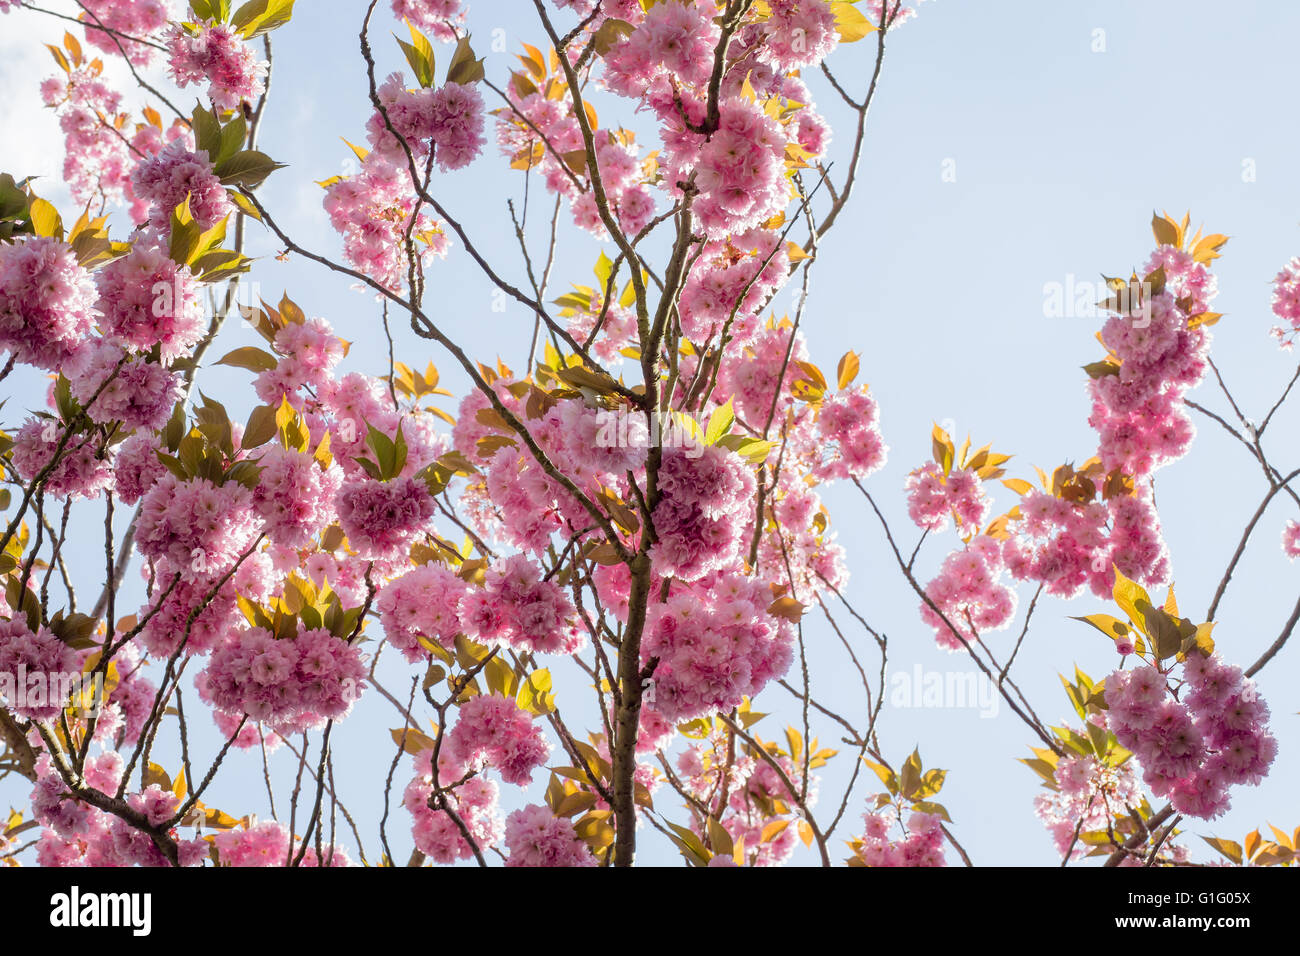 Spring pink flowers, Prunus Kanzan Kwanzan Cherry blossom on tree branches Stock Photo